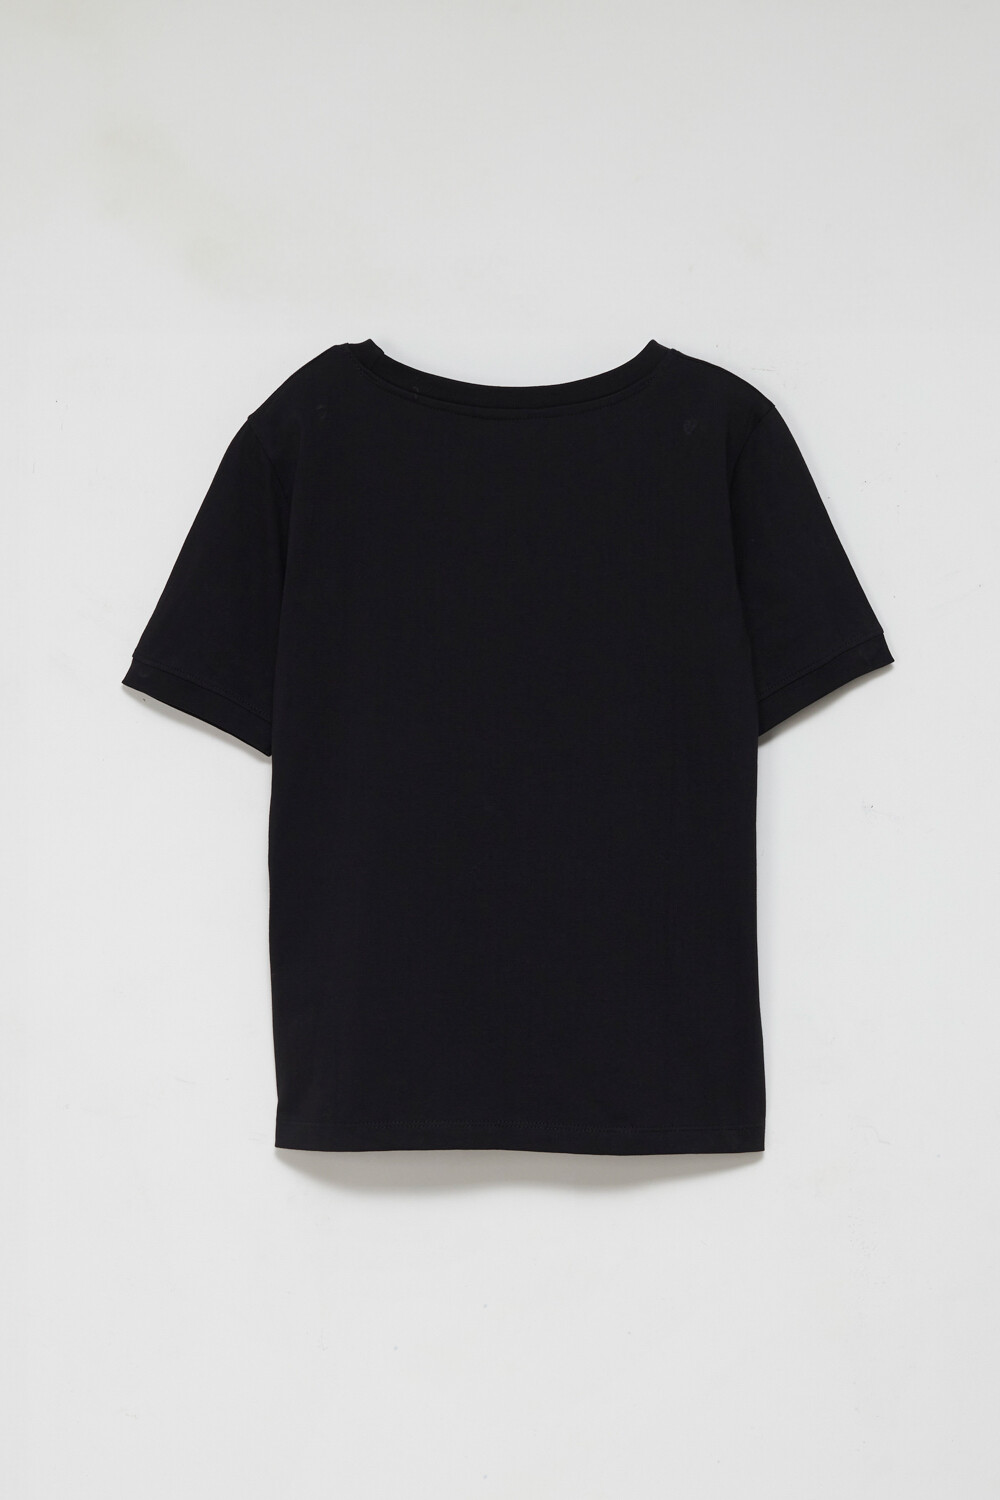 Camiseta negra con manga corta y cuello redondo en rib